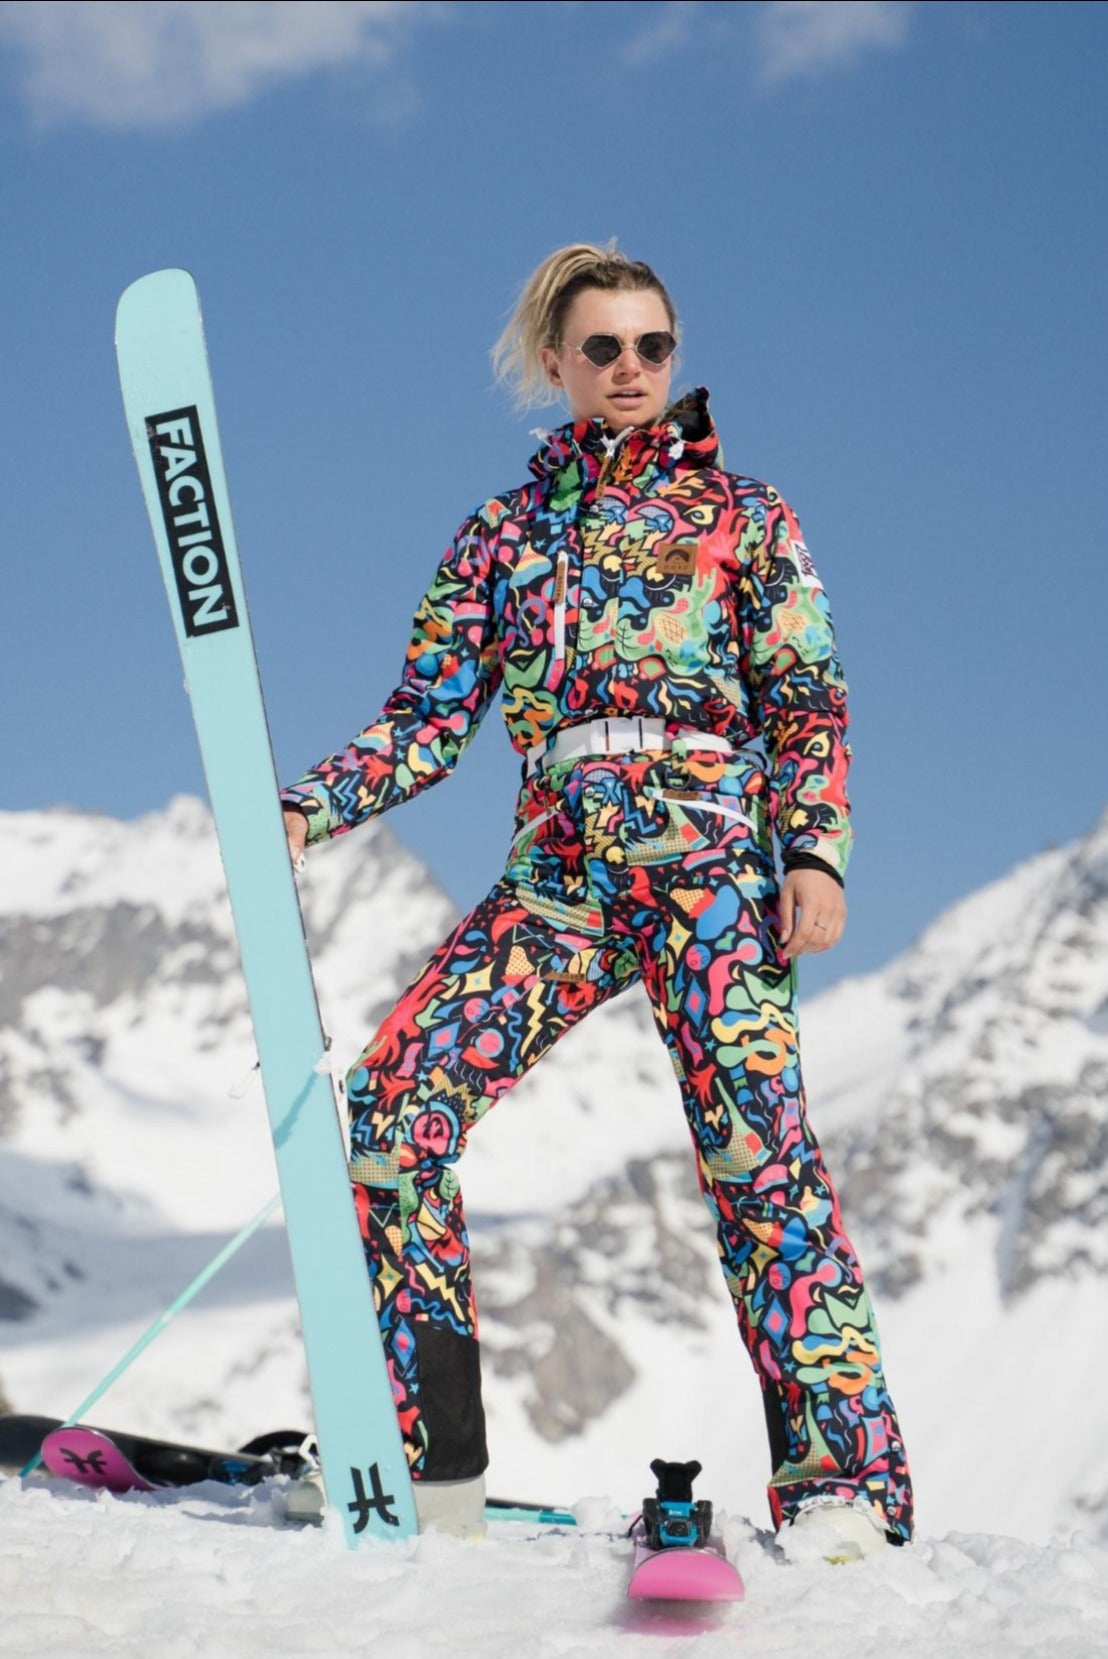 Women's Après Ski Clothing